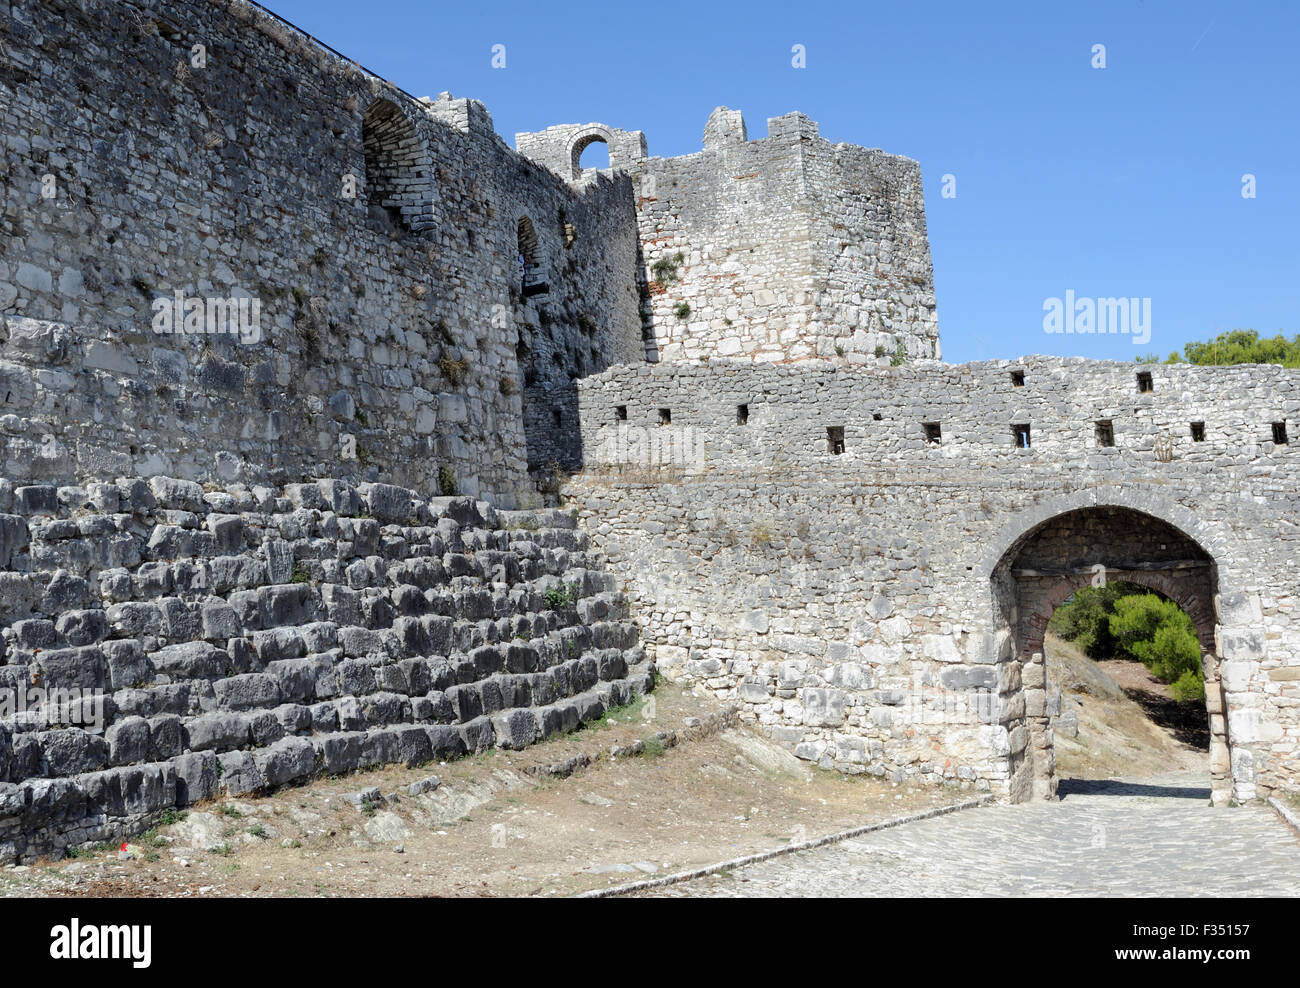 Arched gateway in the walls of the thirteenth century Berat Castle, Kalaja e Beratit.  Berat Castle is a world heritage site. Stock Photo